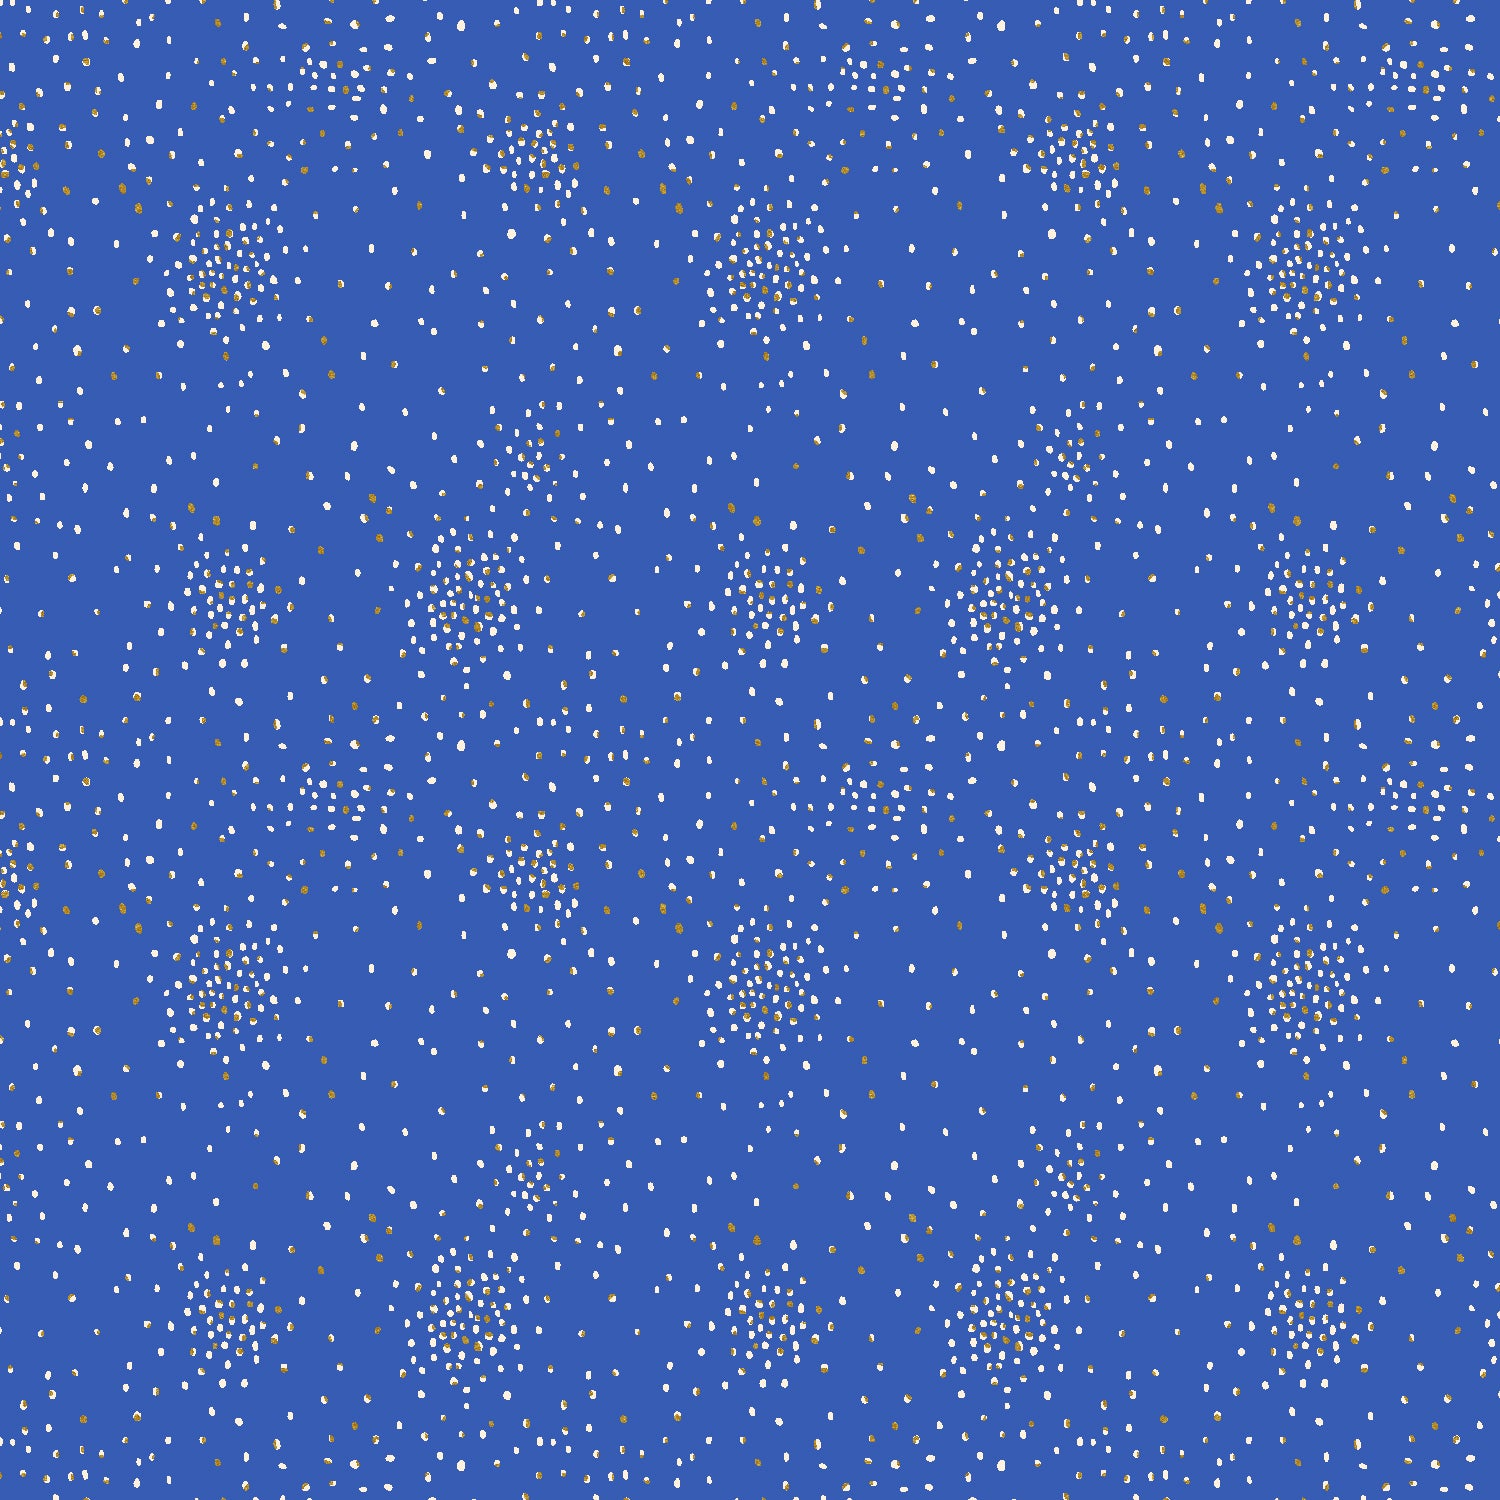 Clusters Quilt Fabric by Cotton+Steel - Deep Ocean Metallic (Blue) - CS107-DO12M